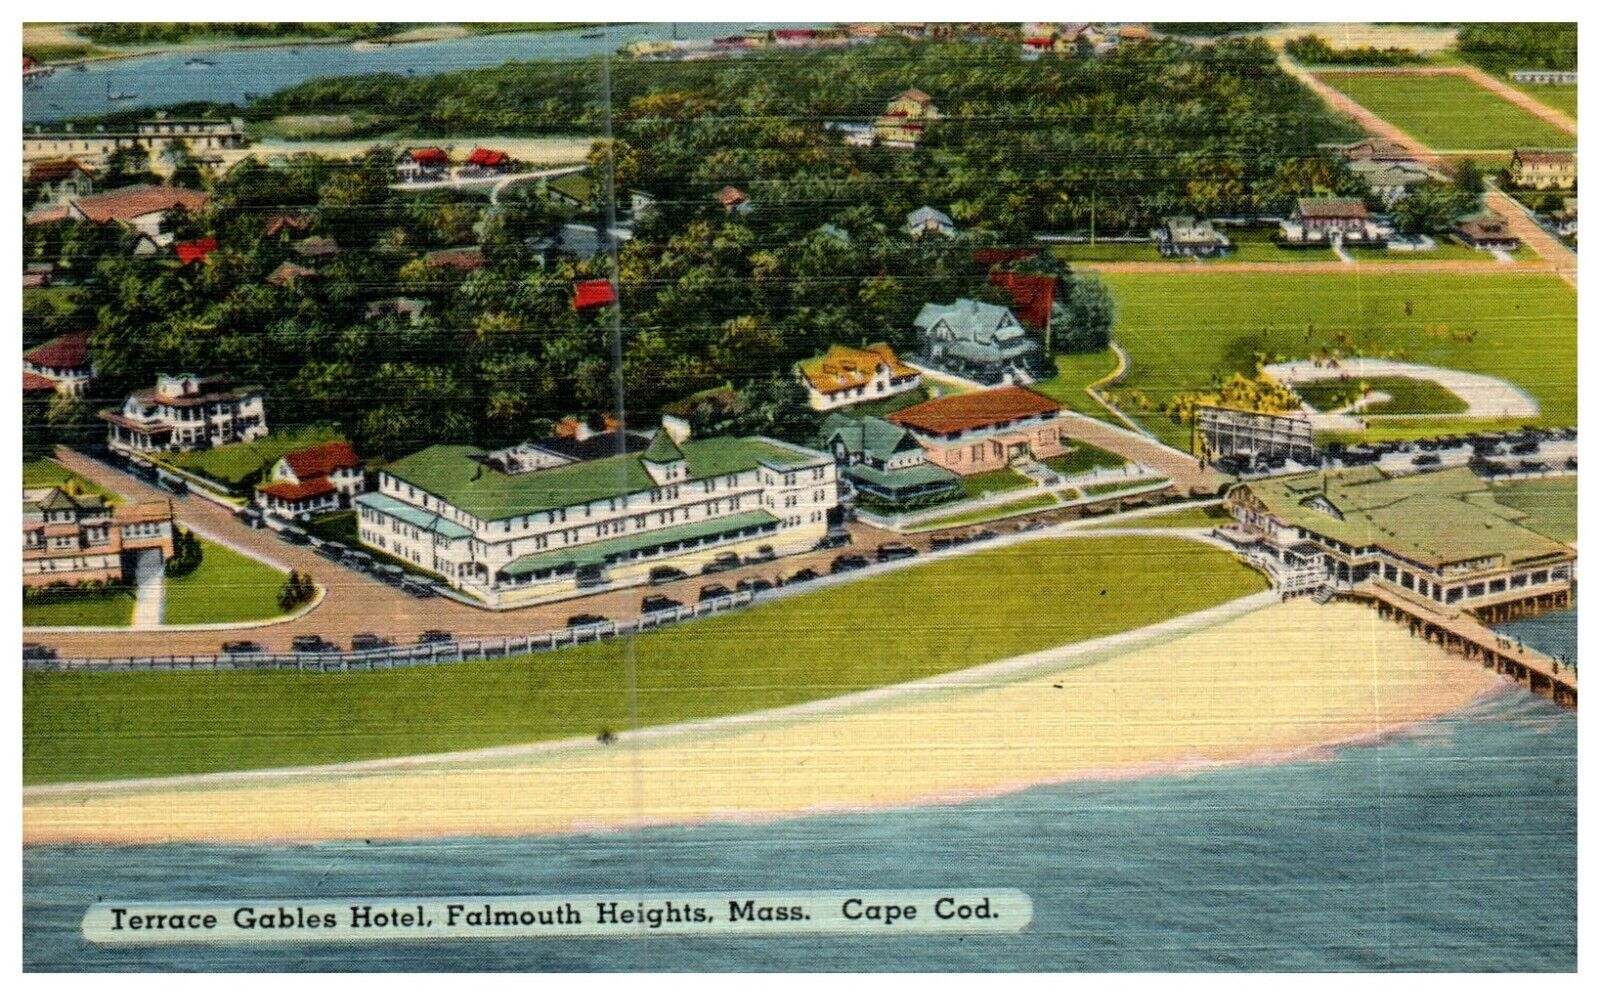 Terrace Gables Hotel Cape Cod Falmouth Heights, MA Mass Vintage Linen Postcard